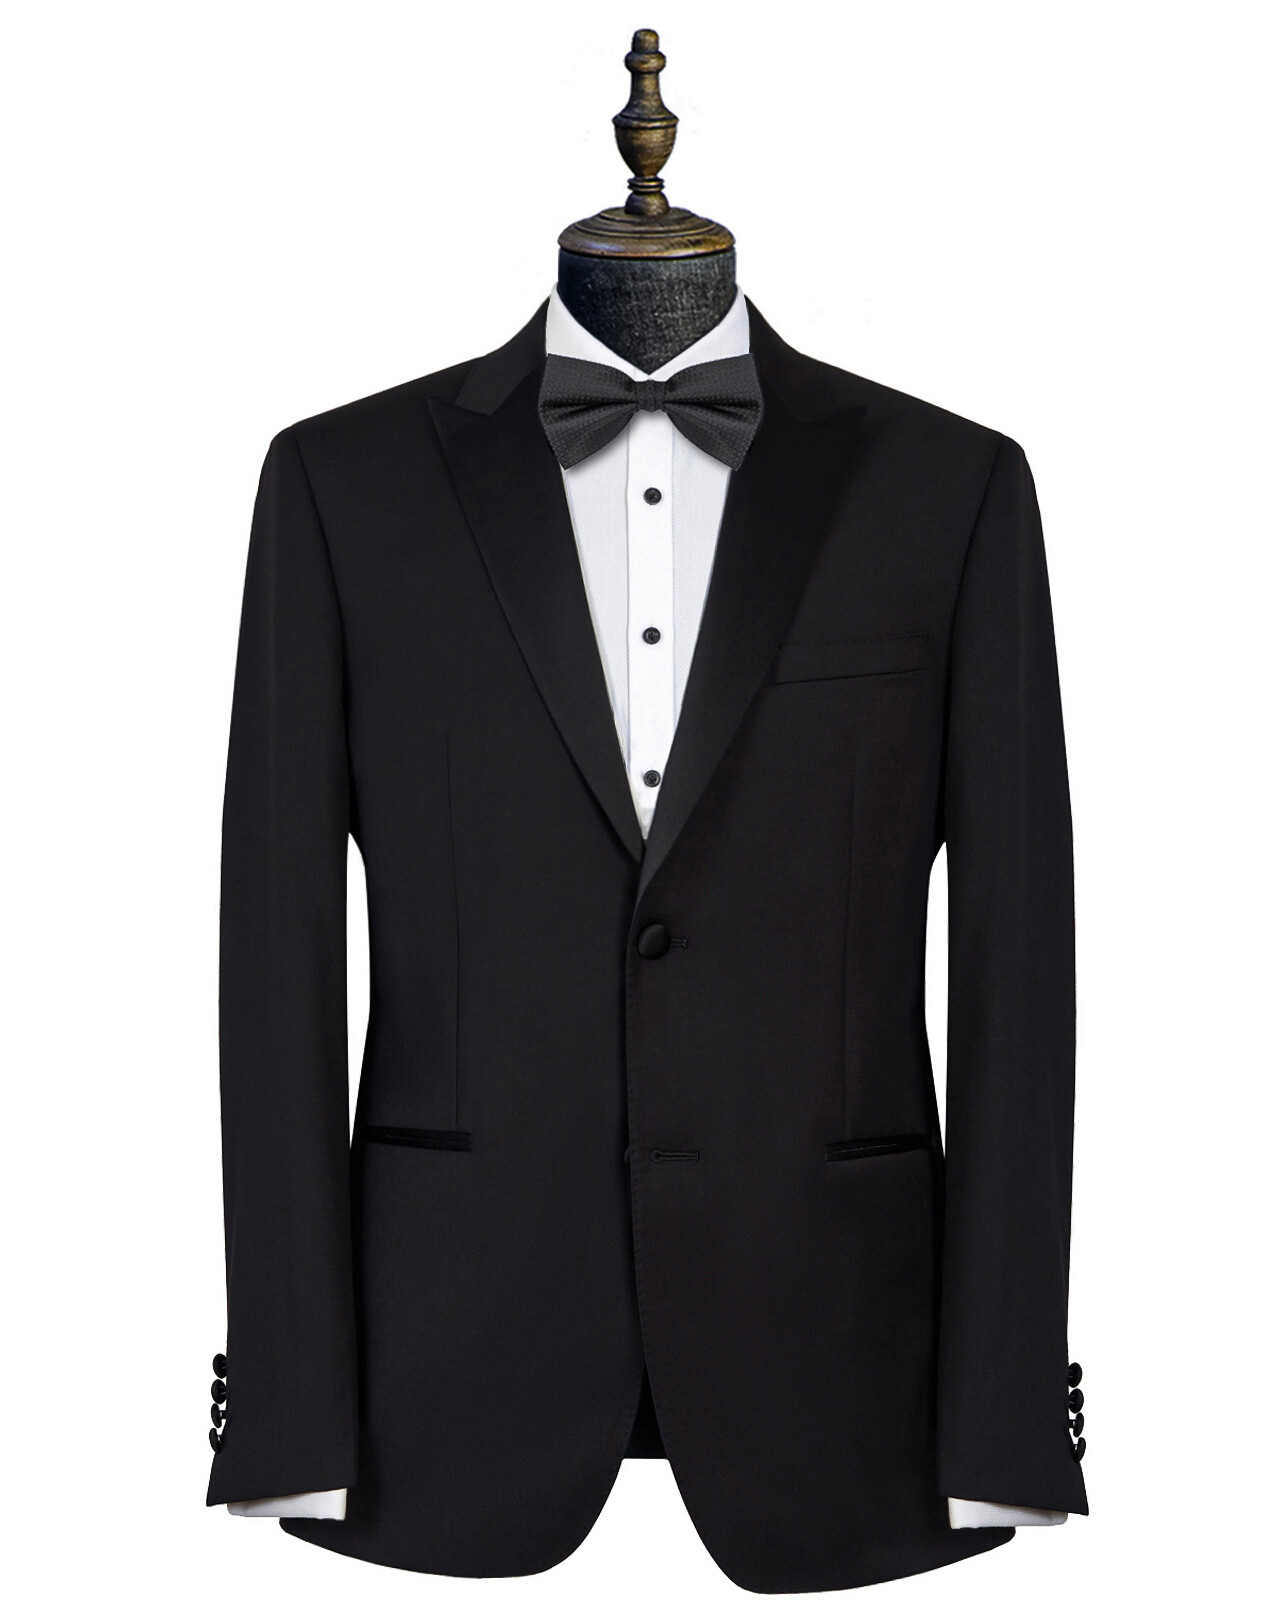 Gibson Black Peak Lapel Tuxedo - Black Jacket Suiting